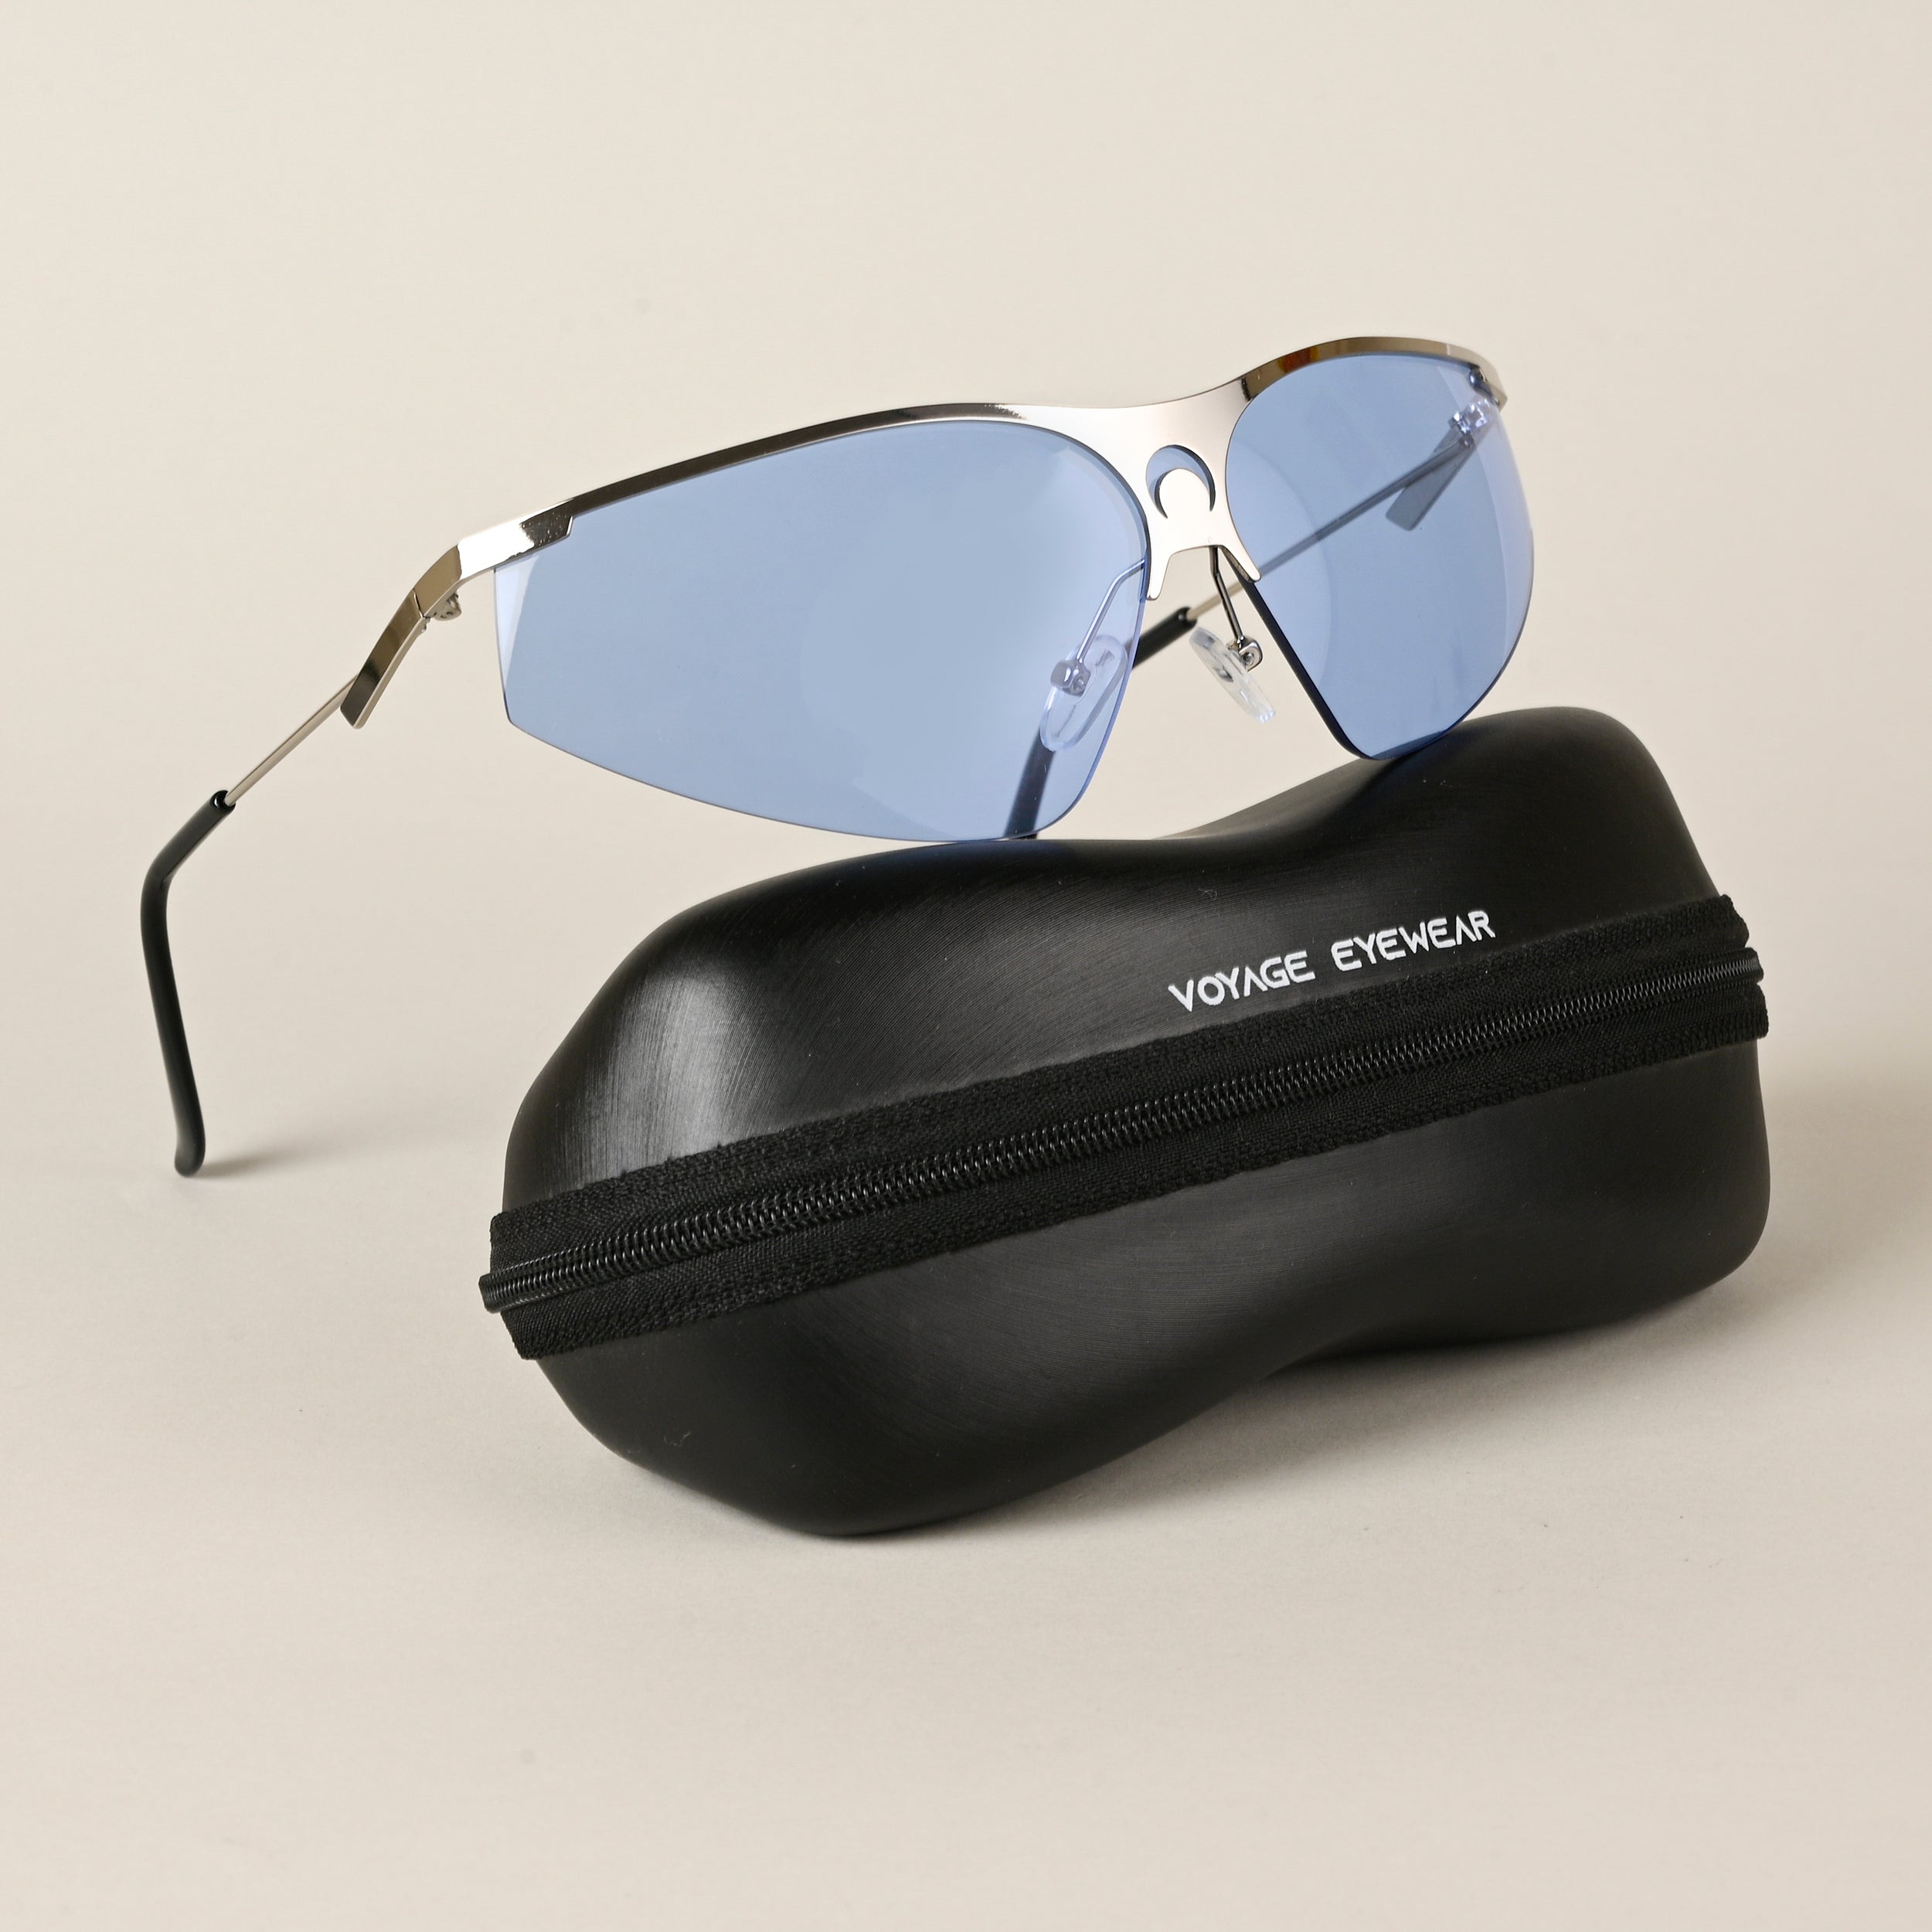 Voyage Blue Wrap-Around Sunglasses for Men & Women (3563MG4222)